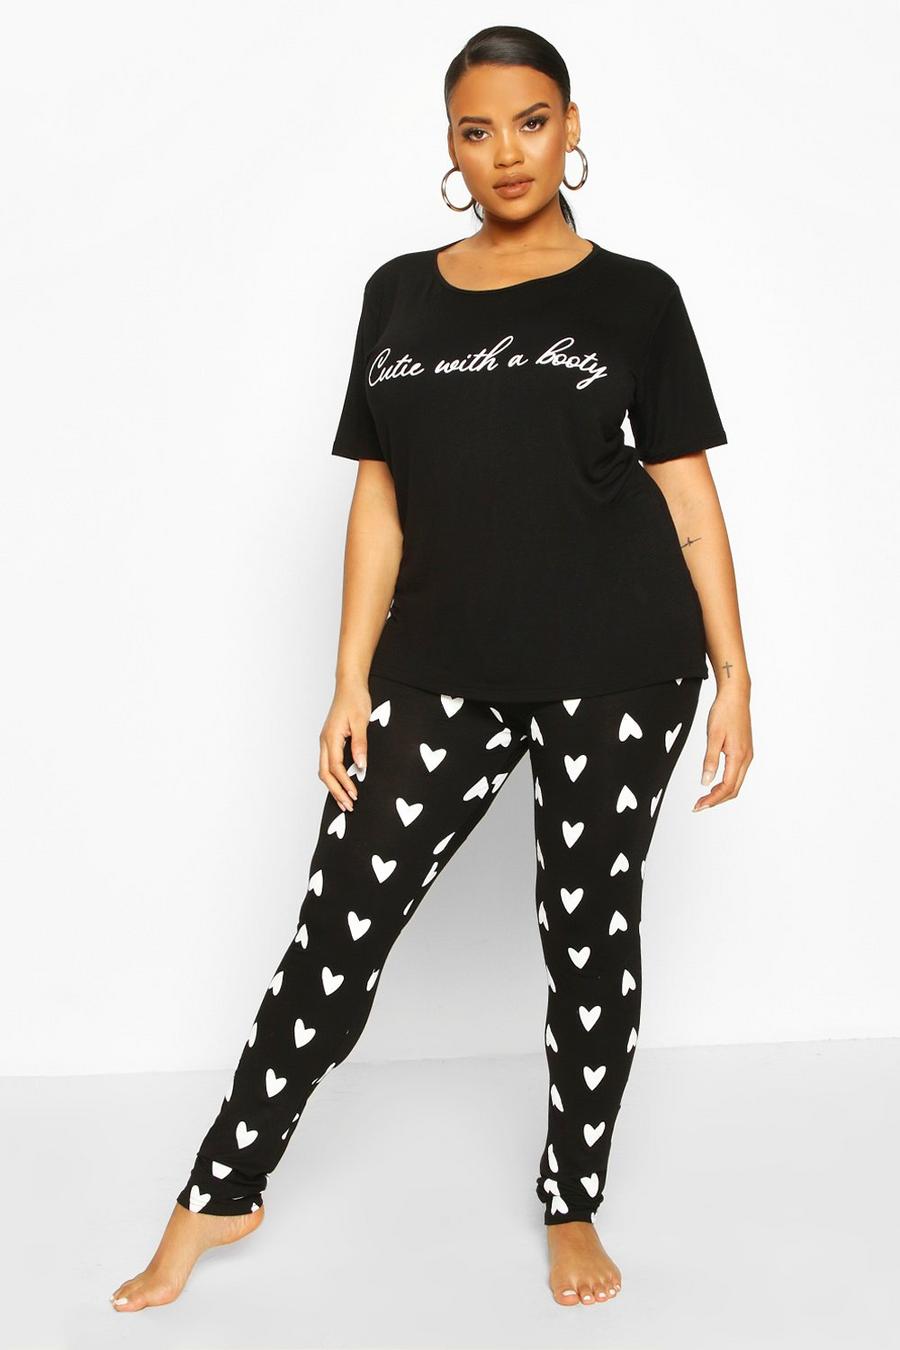 Black Plus 'Cutie With A Booty' Slogan Top & Heart Print Trousers Pyjama Set